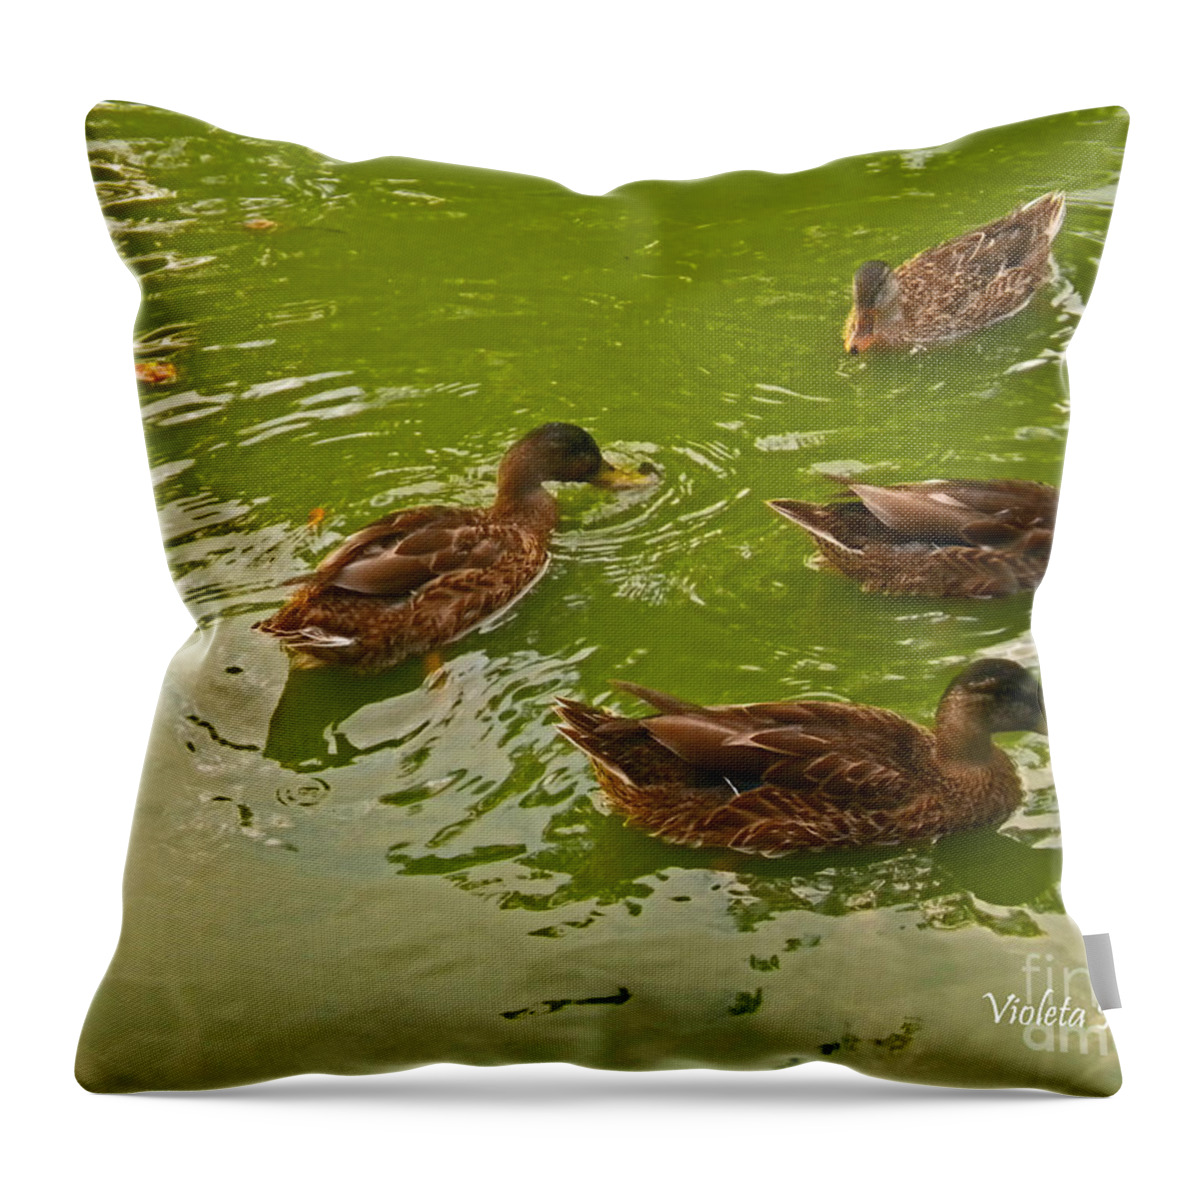 Ducks Throw Pillow featuring the photograph Family Time by Violeta Ianeva